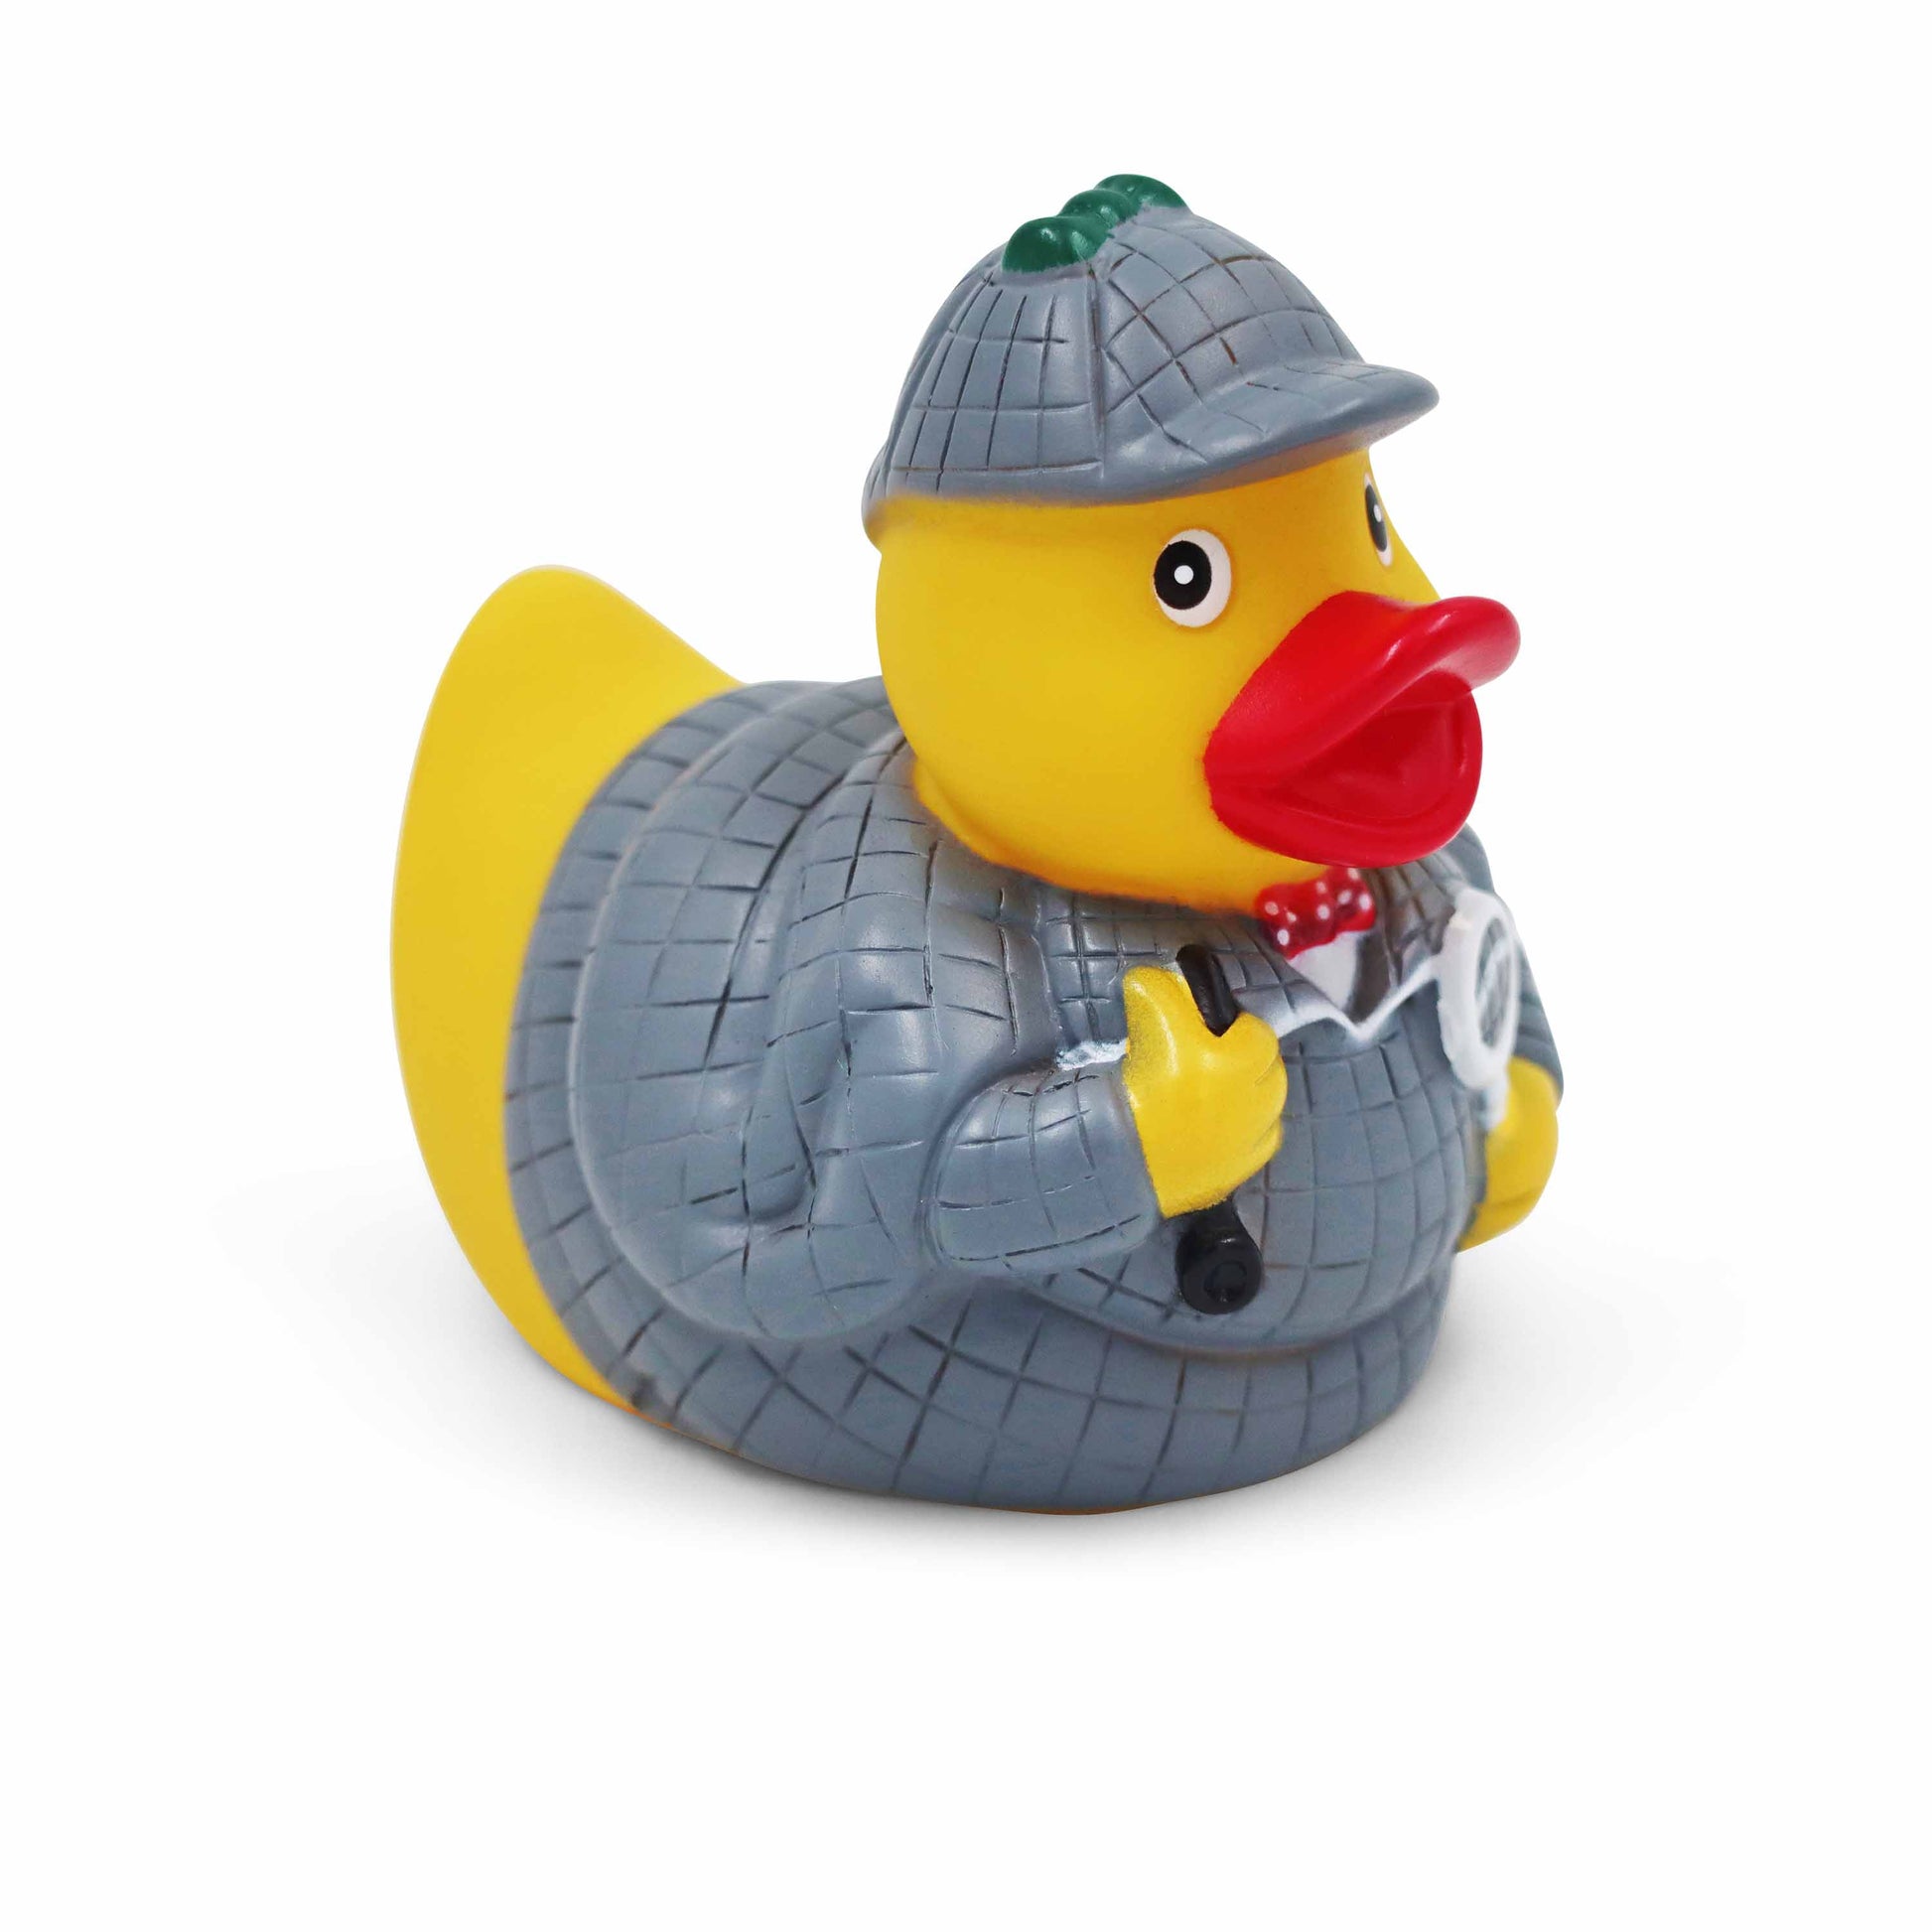 Sherlock Holmes Rubber Duck - London souvenirs